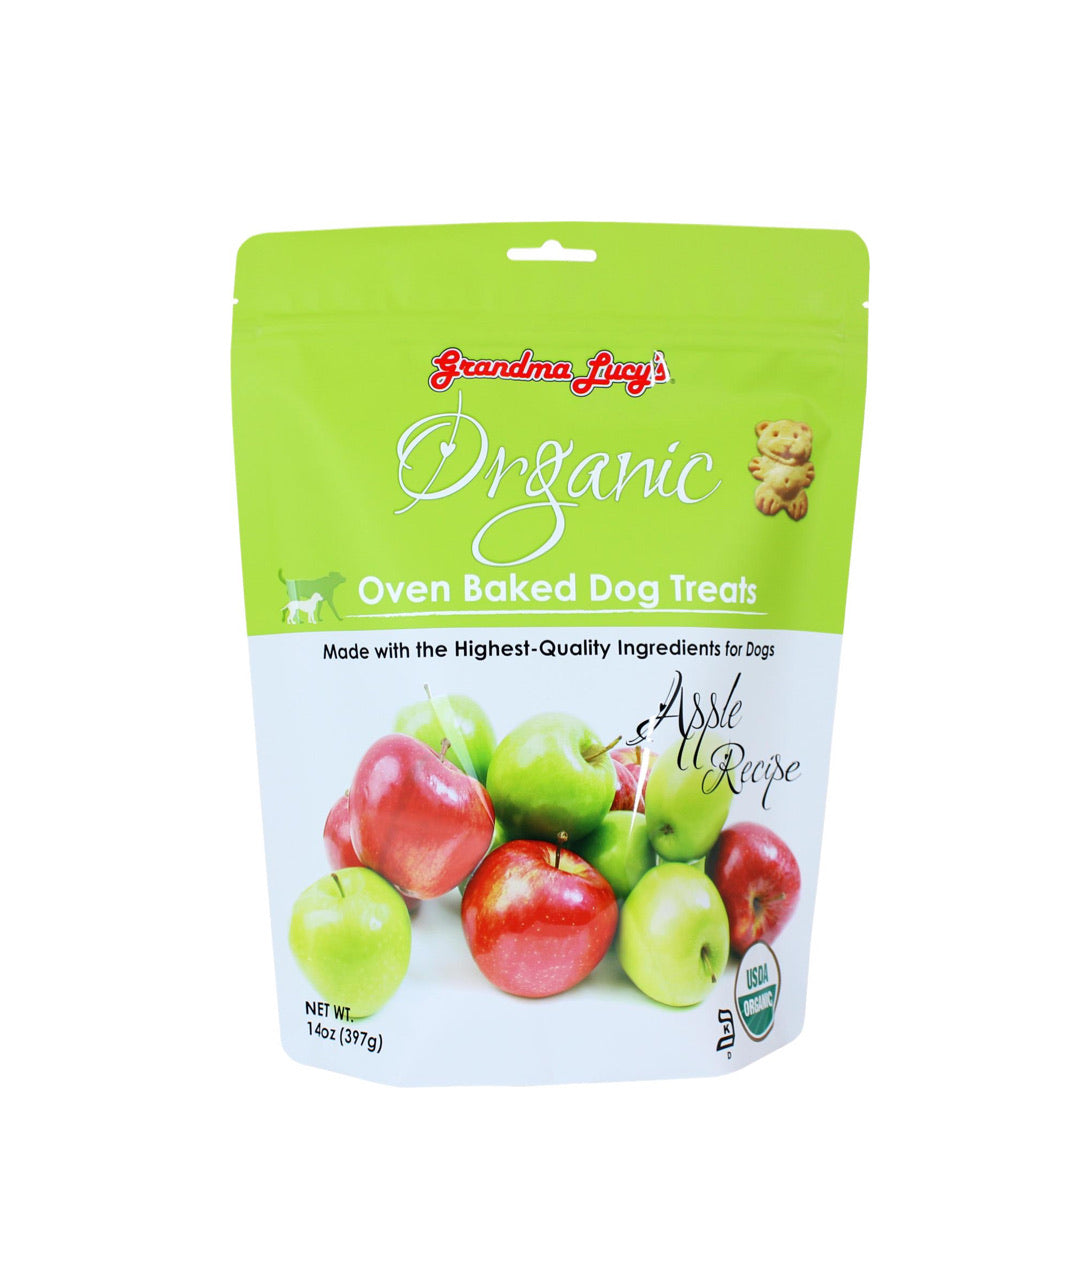 Grandma Lucy’s Organic Oven Baked Apple Dog Treats (397g)